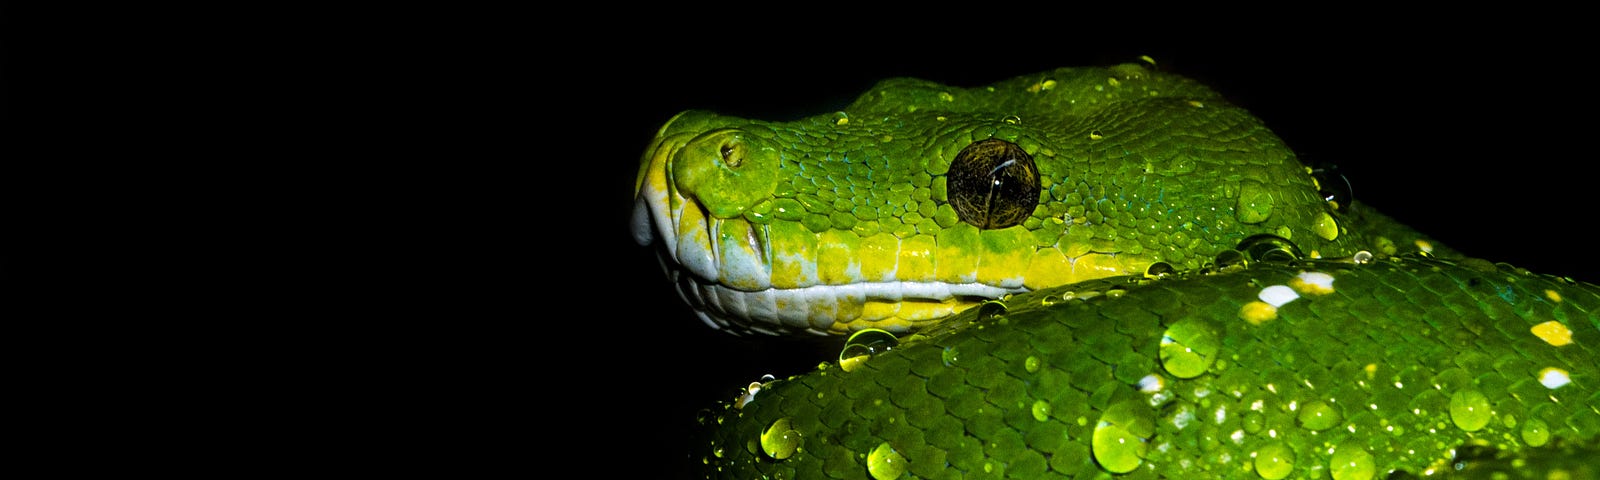 Green python against black background